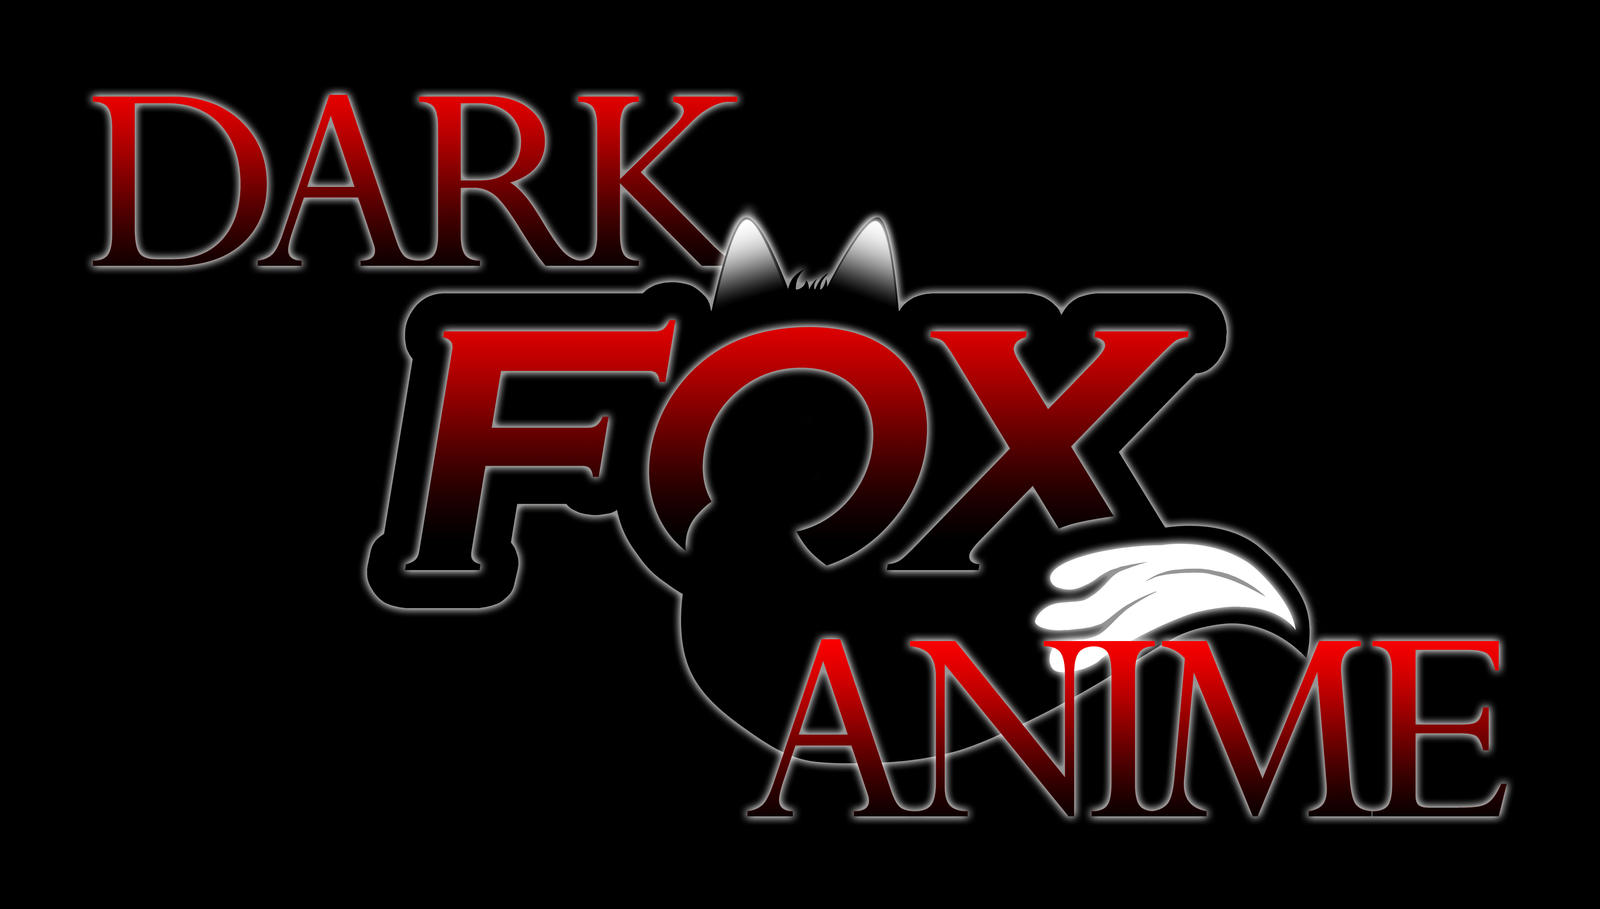 Dark fox. Клуб каратэ Блэк Фокс. Отряд "Blackfox".